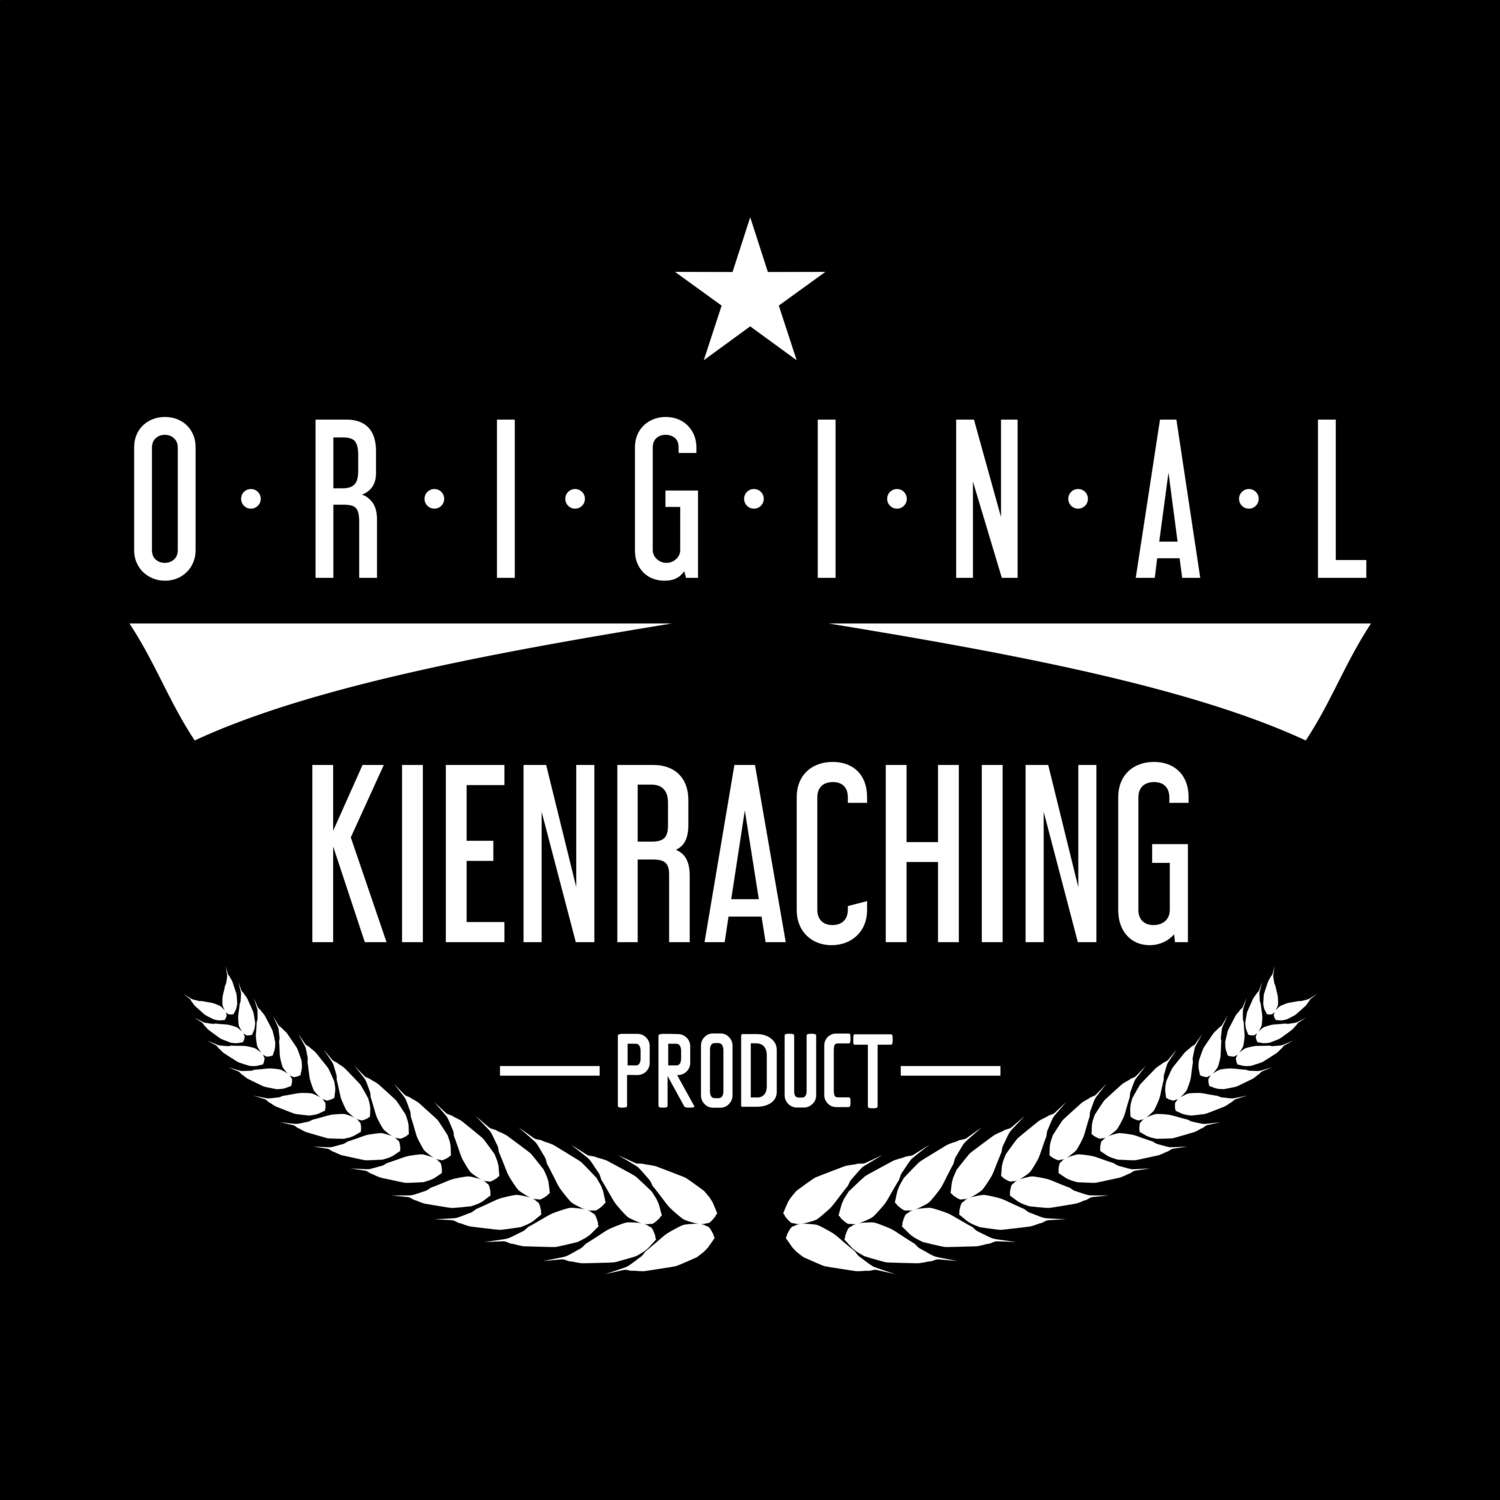 Kienraching T-Shirt »Original Product«